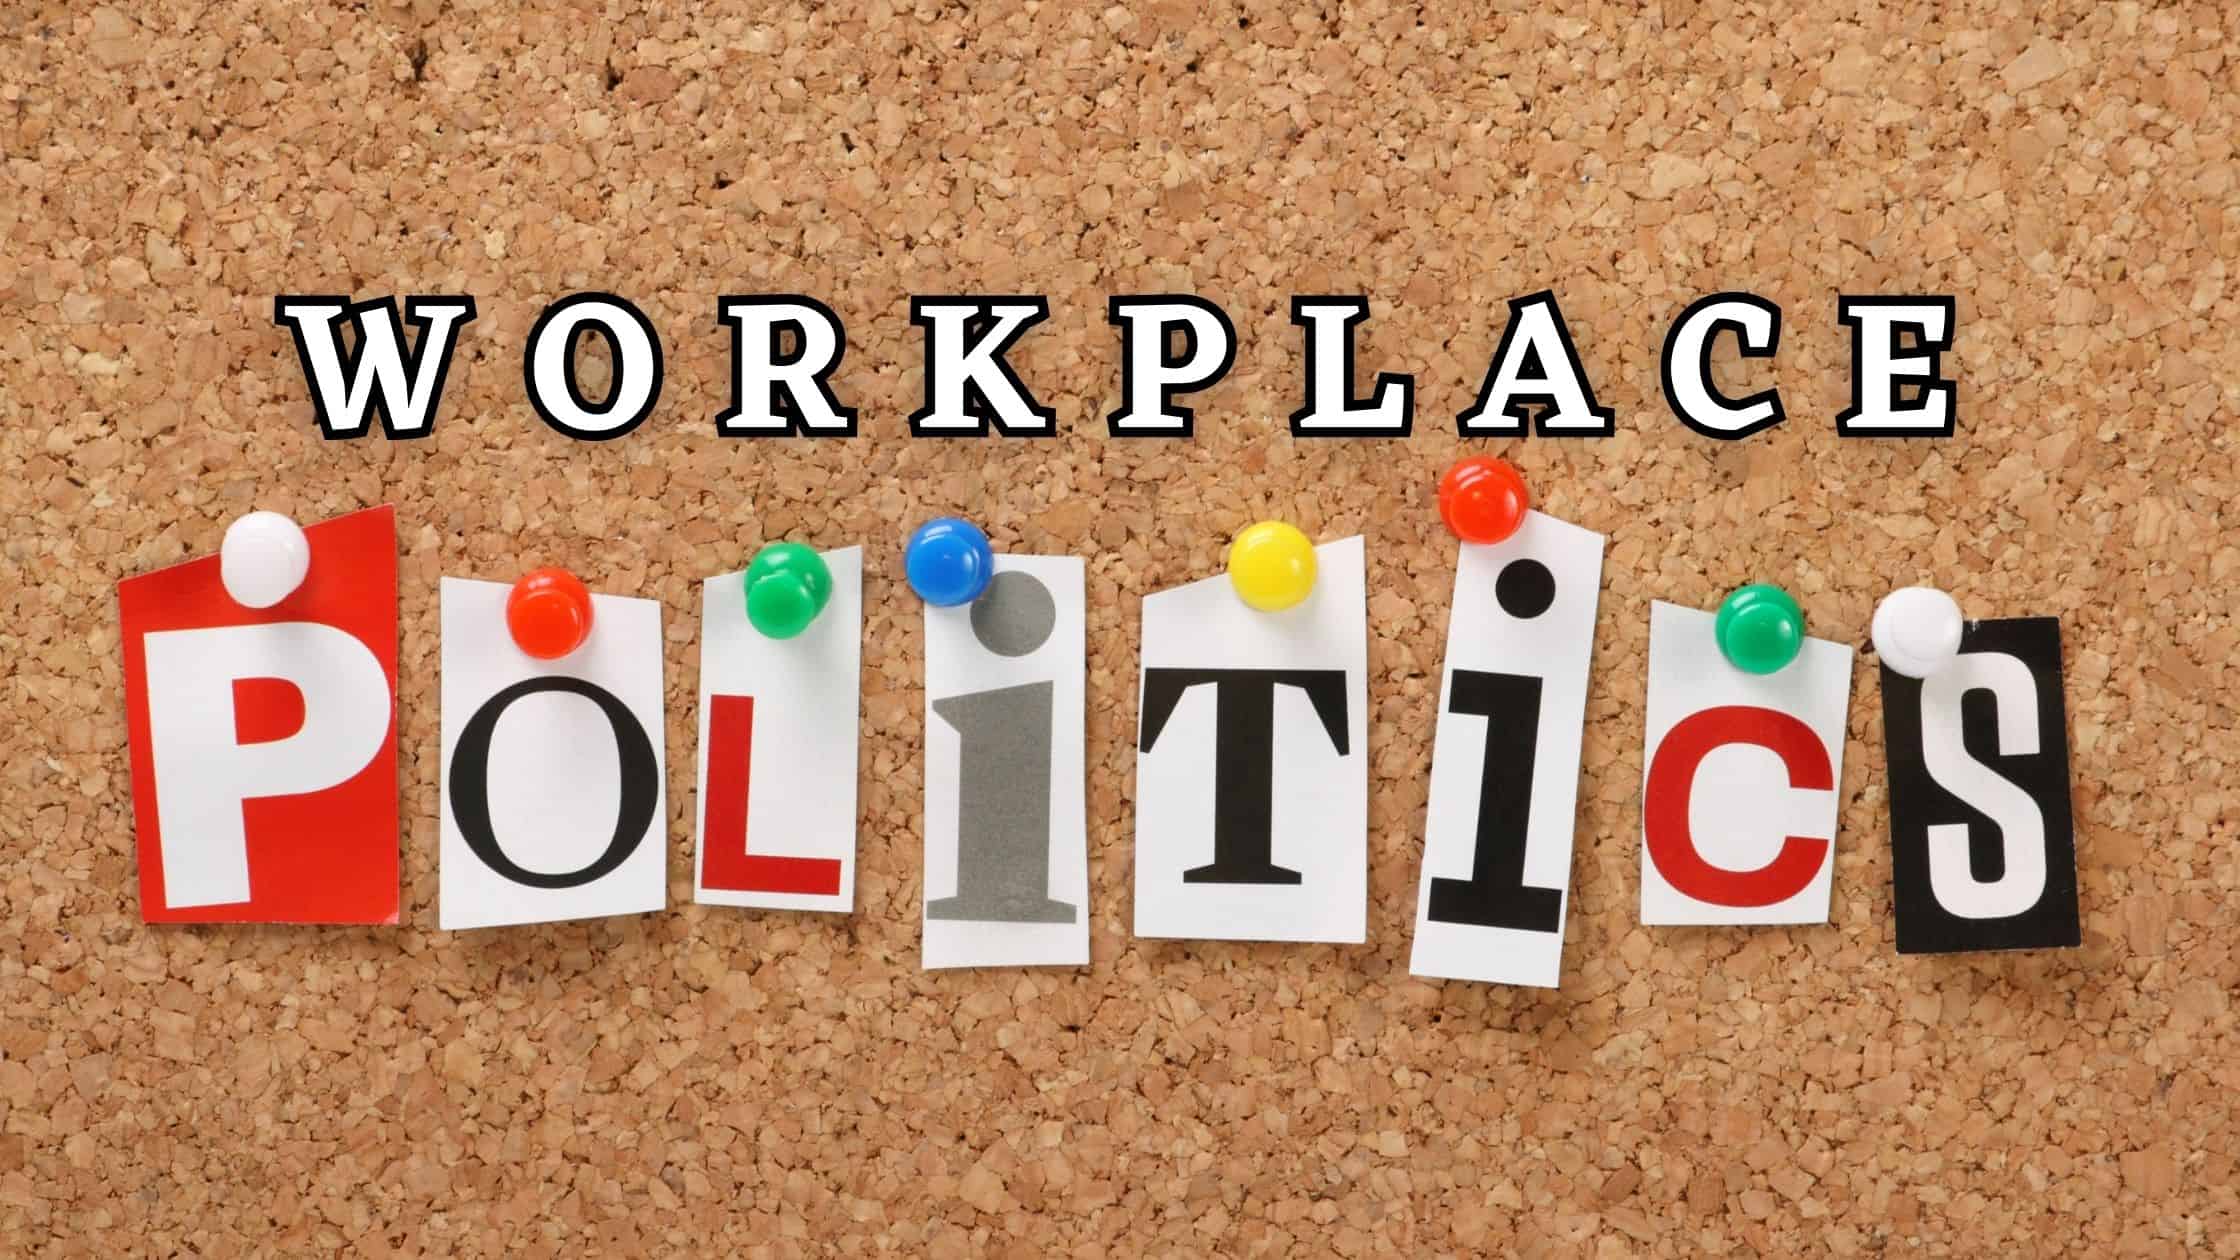 Workplace Politics Defined